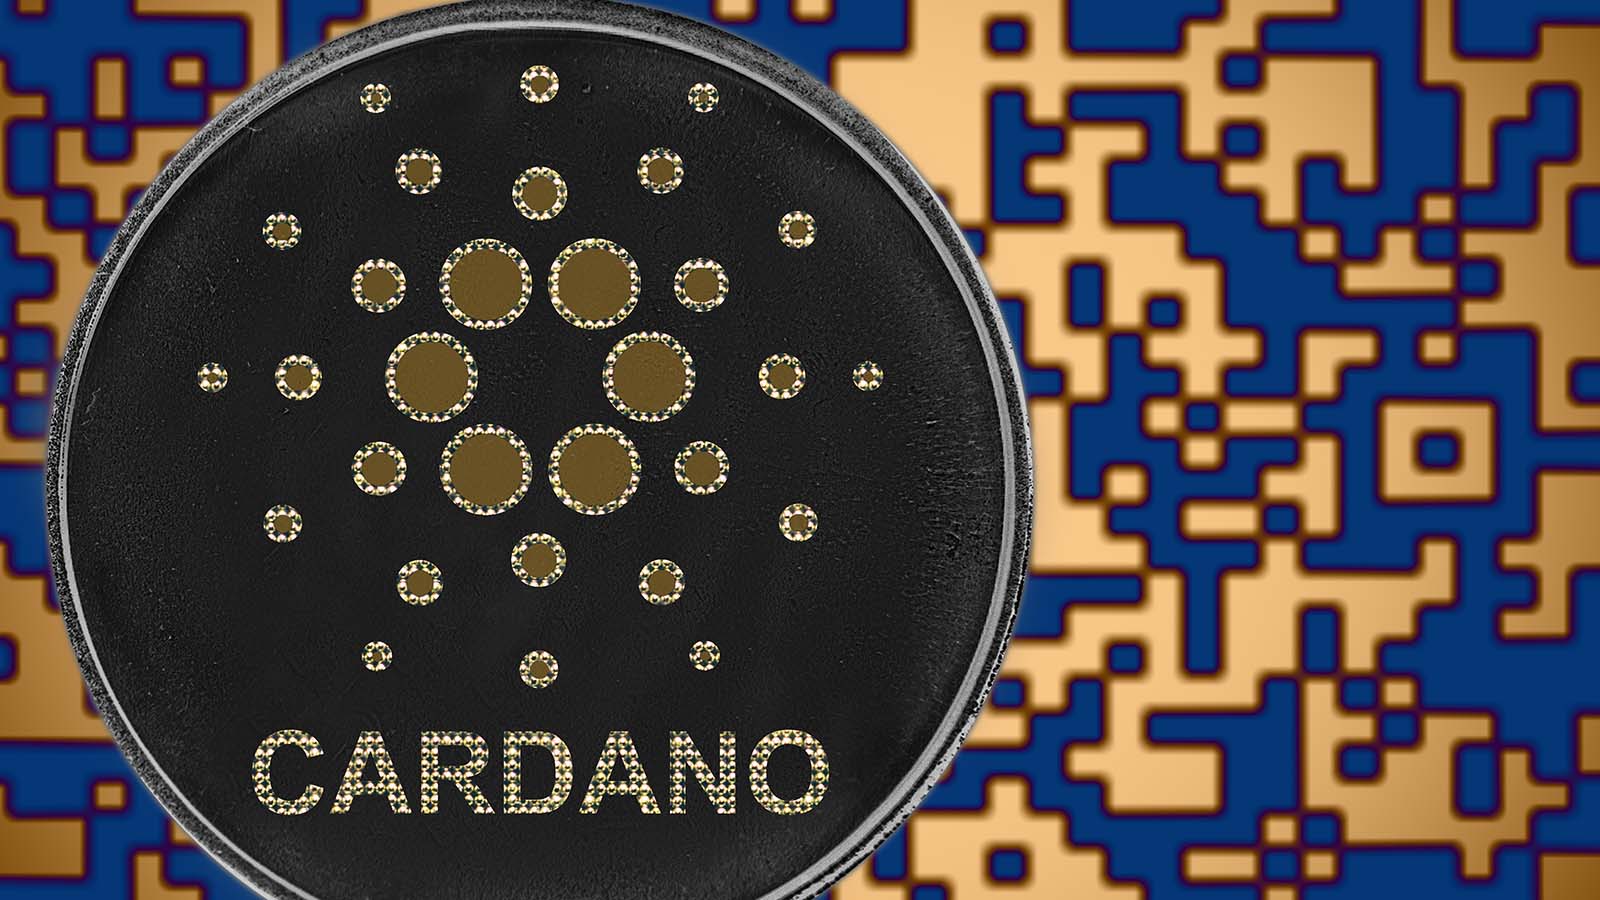 Cardano (ADA) token with blue and orange digital background.